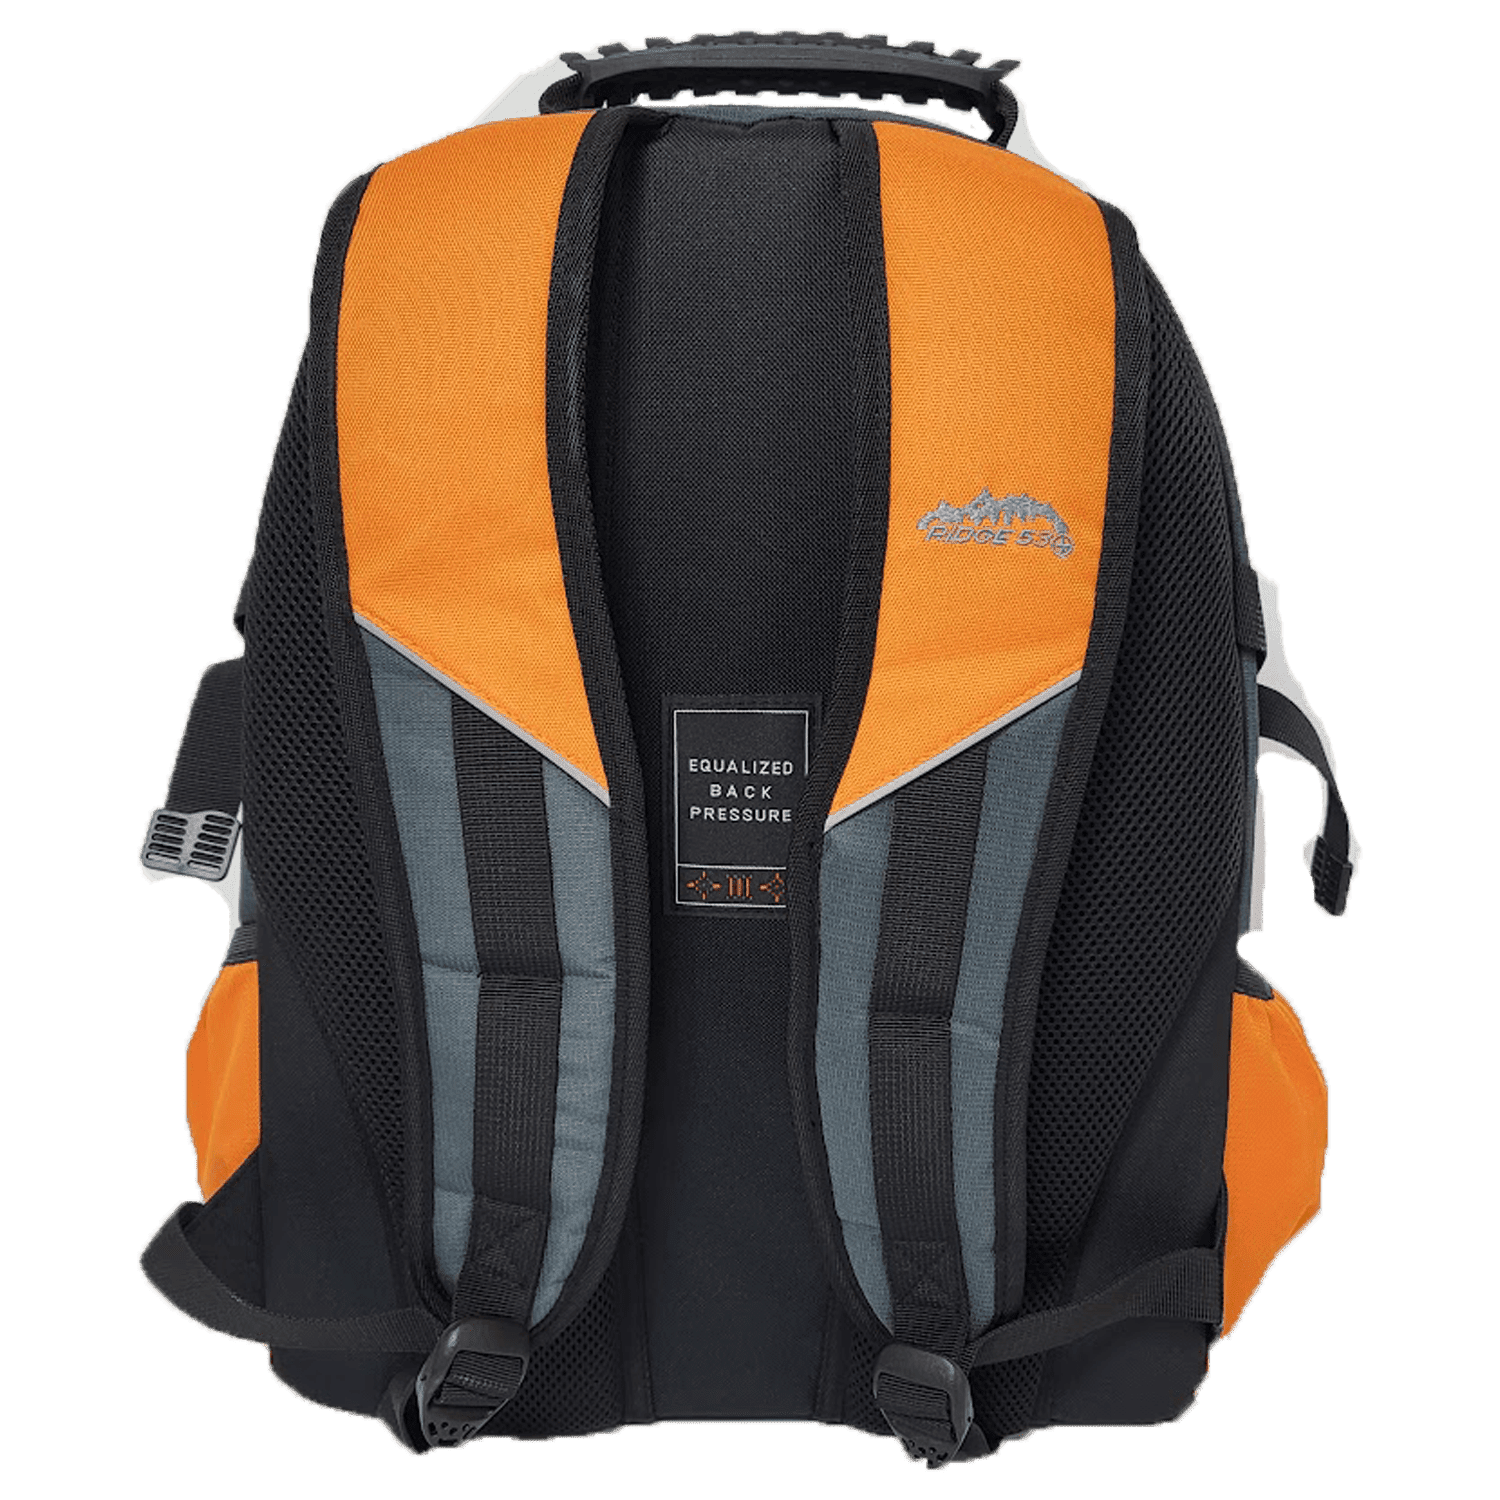 Sportech Ridge 53 – Bolton Backpack - Grey Orange 4 Shaws Department Stores